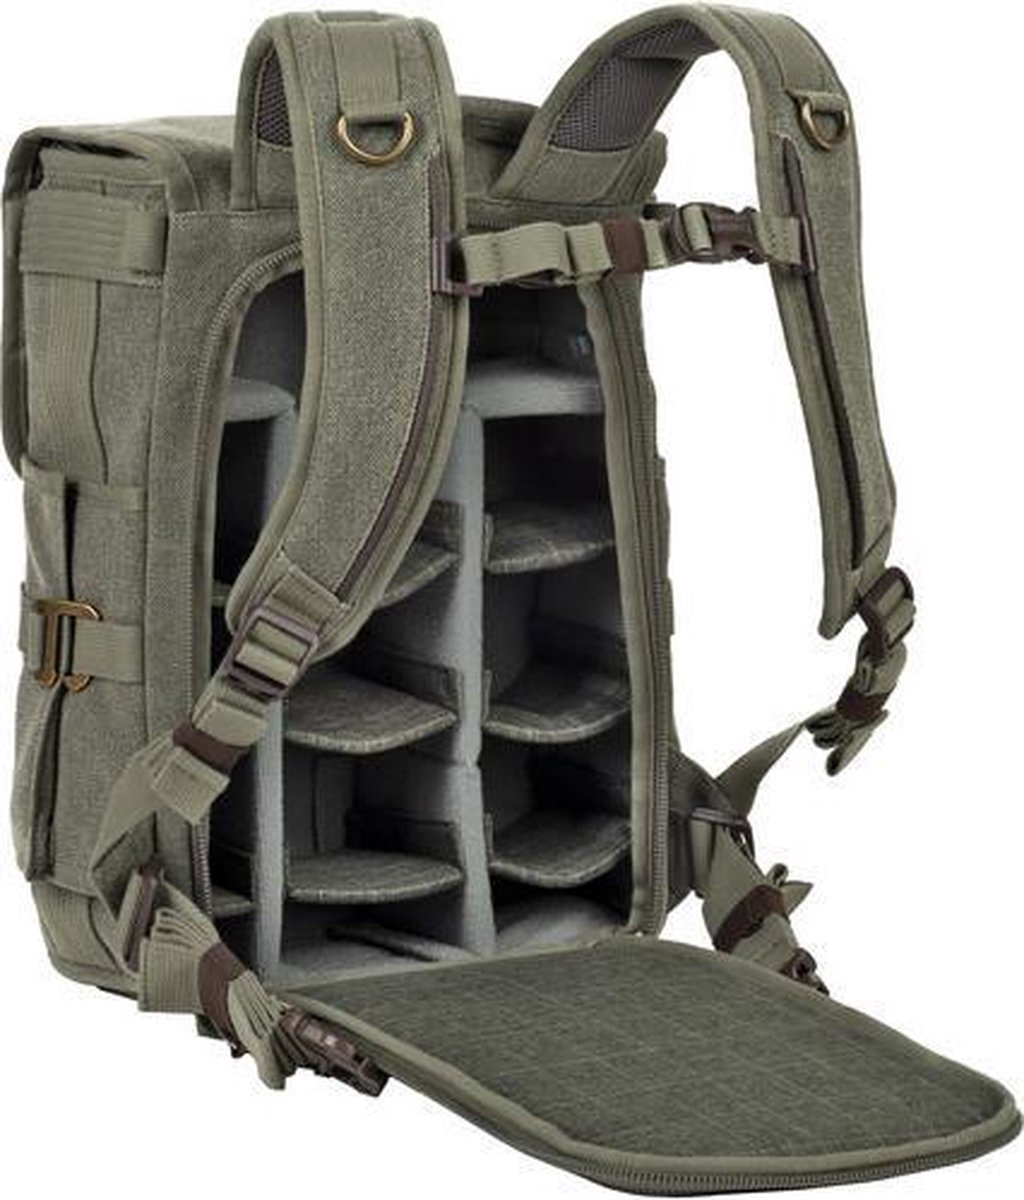 Think Tank Retrospective® backpack 15 - pinestone